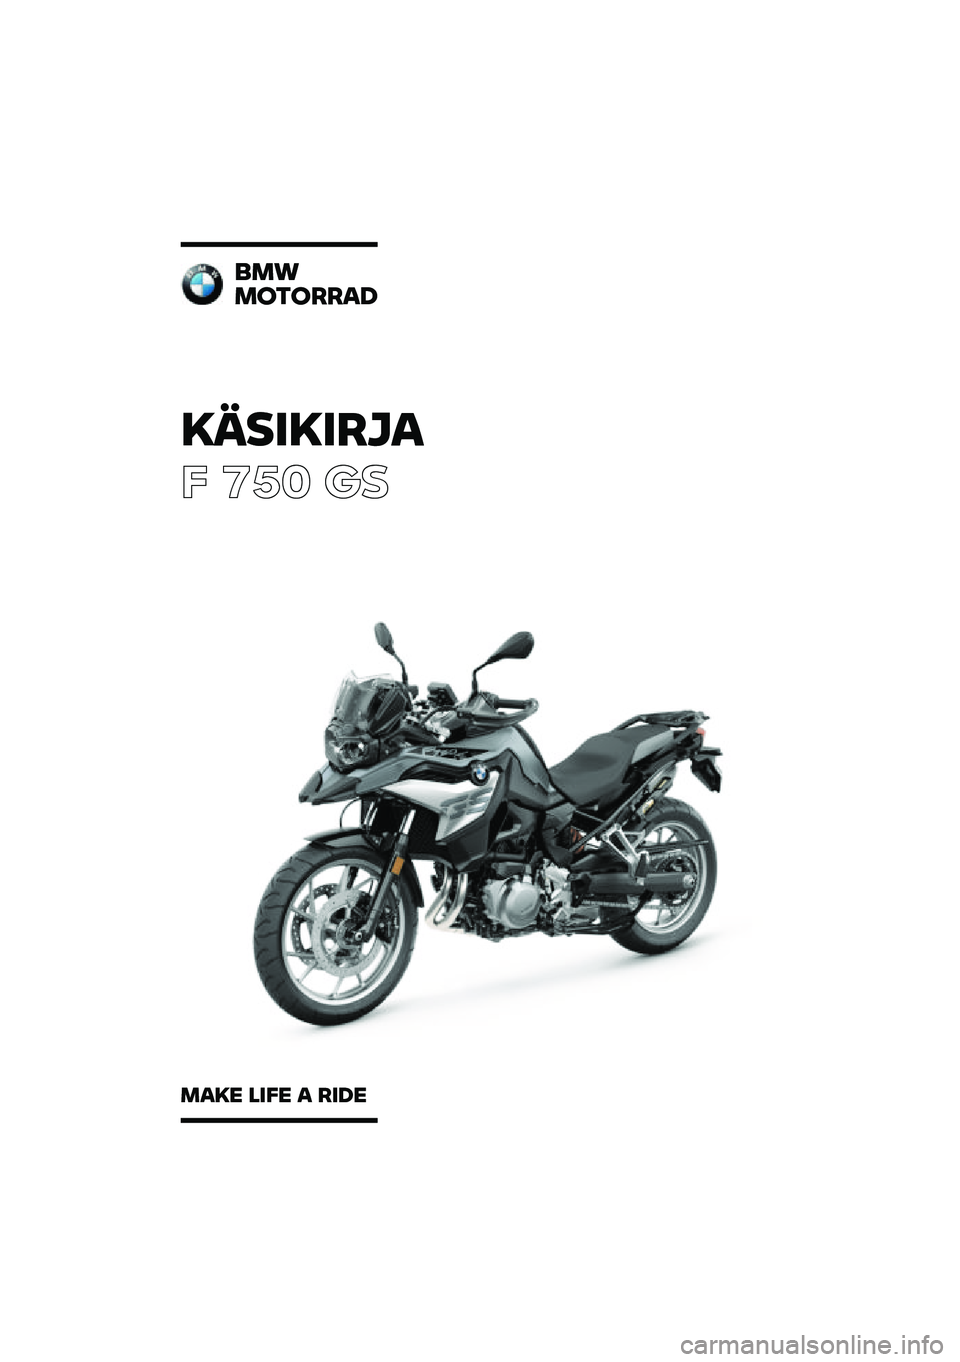 BMW MOTORRAD F 750 GS 2020  Käsikirja (in Finnish) �������\b�	�
� ��� �\b�	
�
��\f
��
��
�\b�\b��
���� ���� � �\b��� 